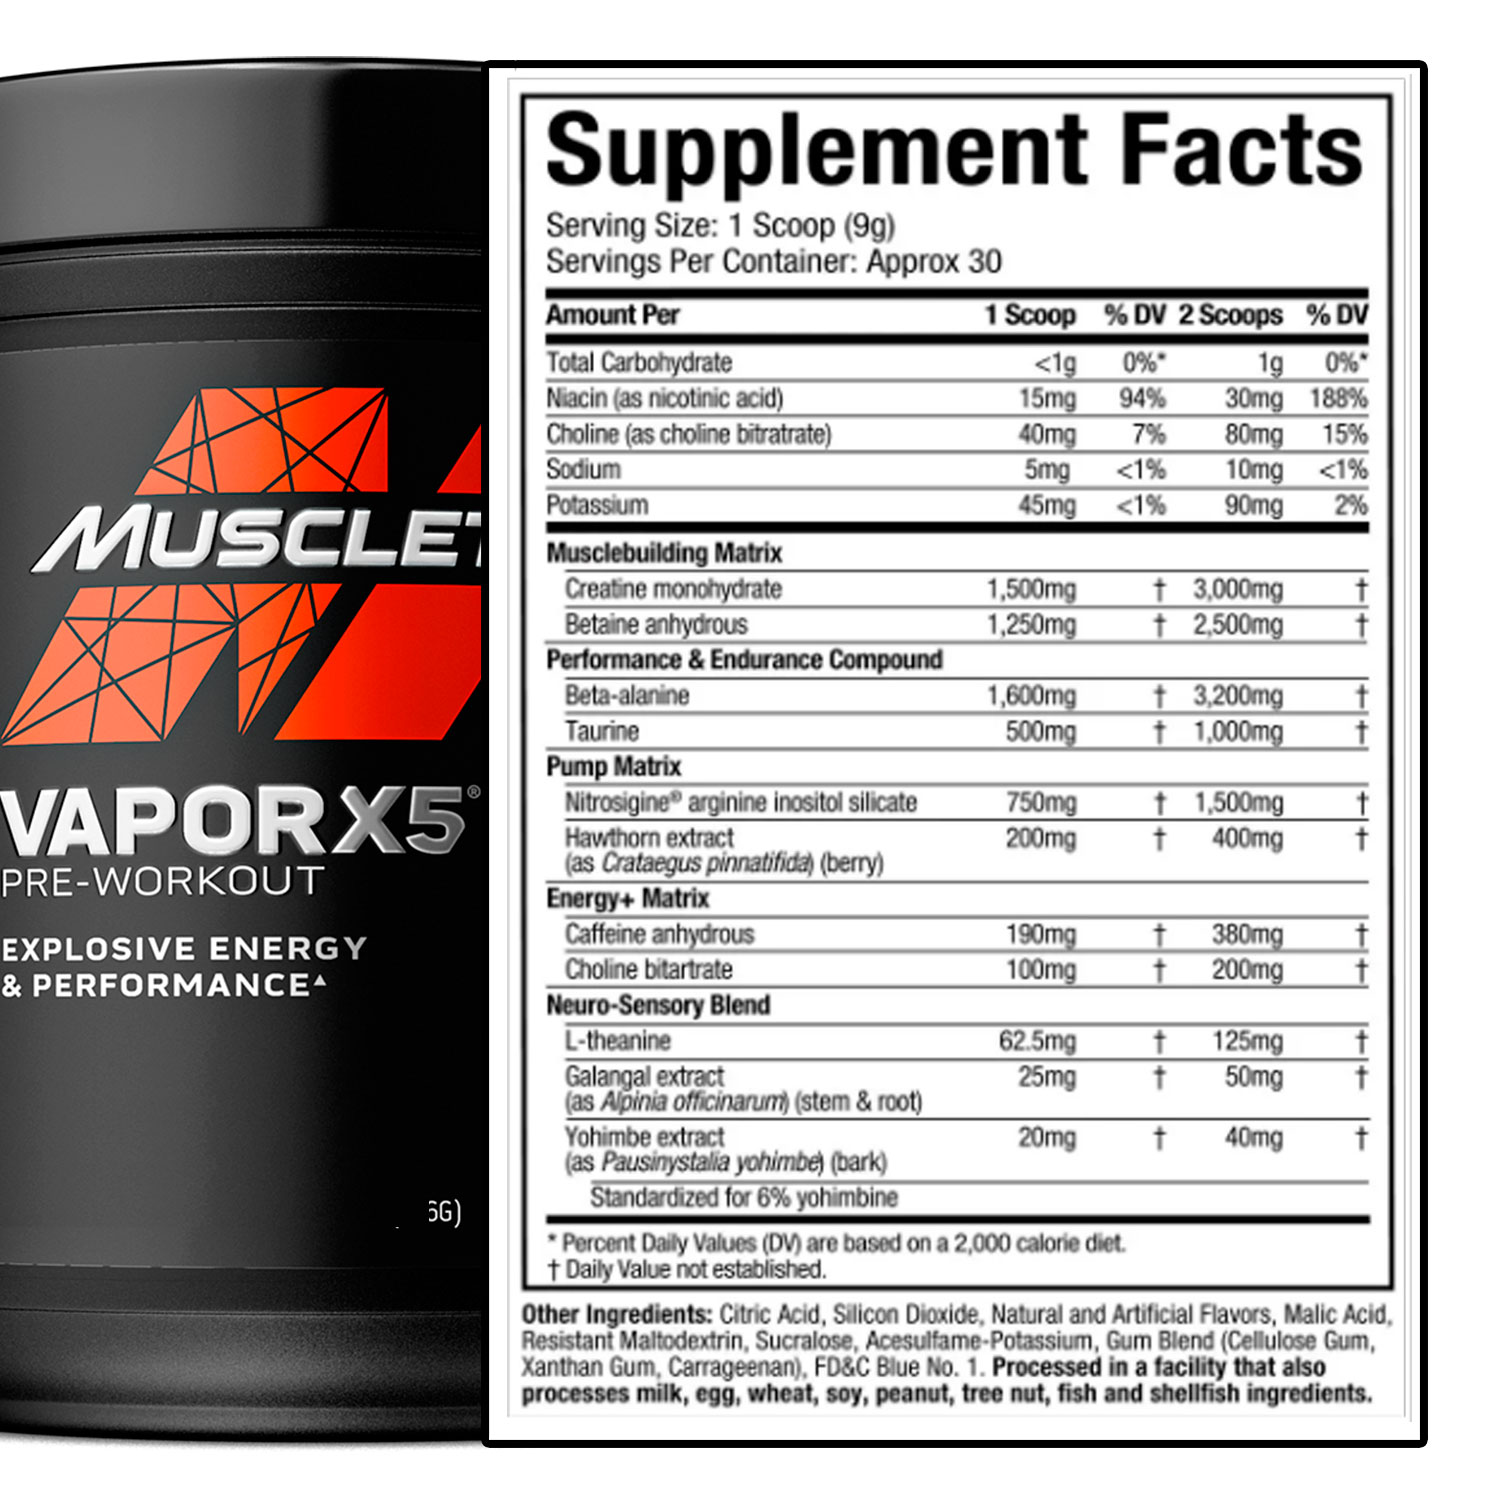 tabela_nutricional_Vapor_x5_muscletech_home_muscle_suplementos